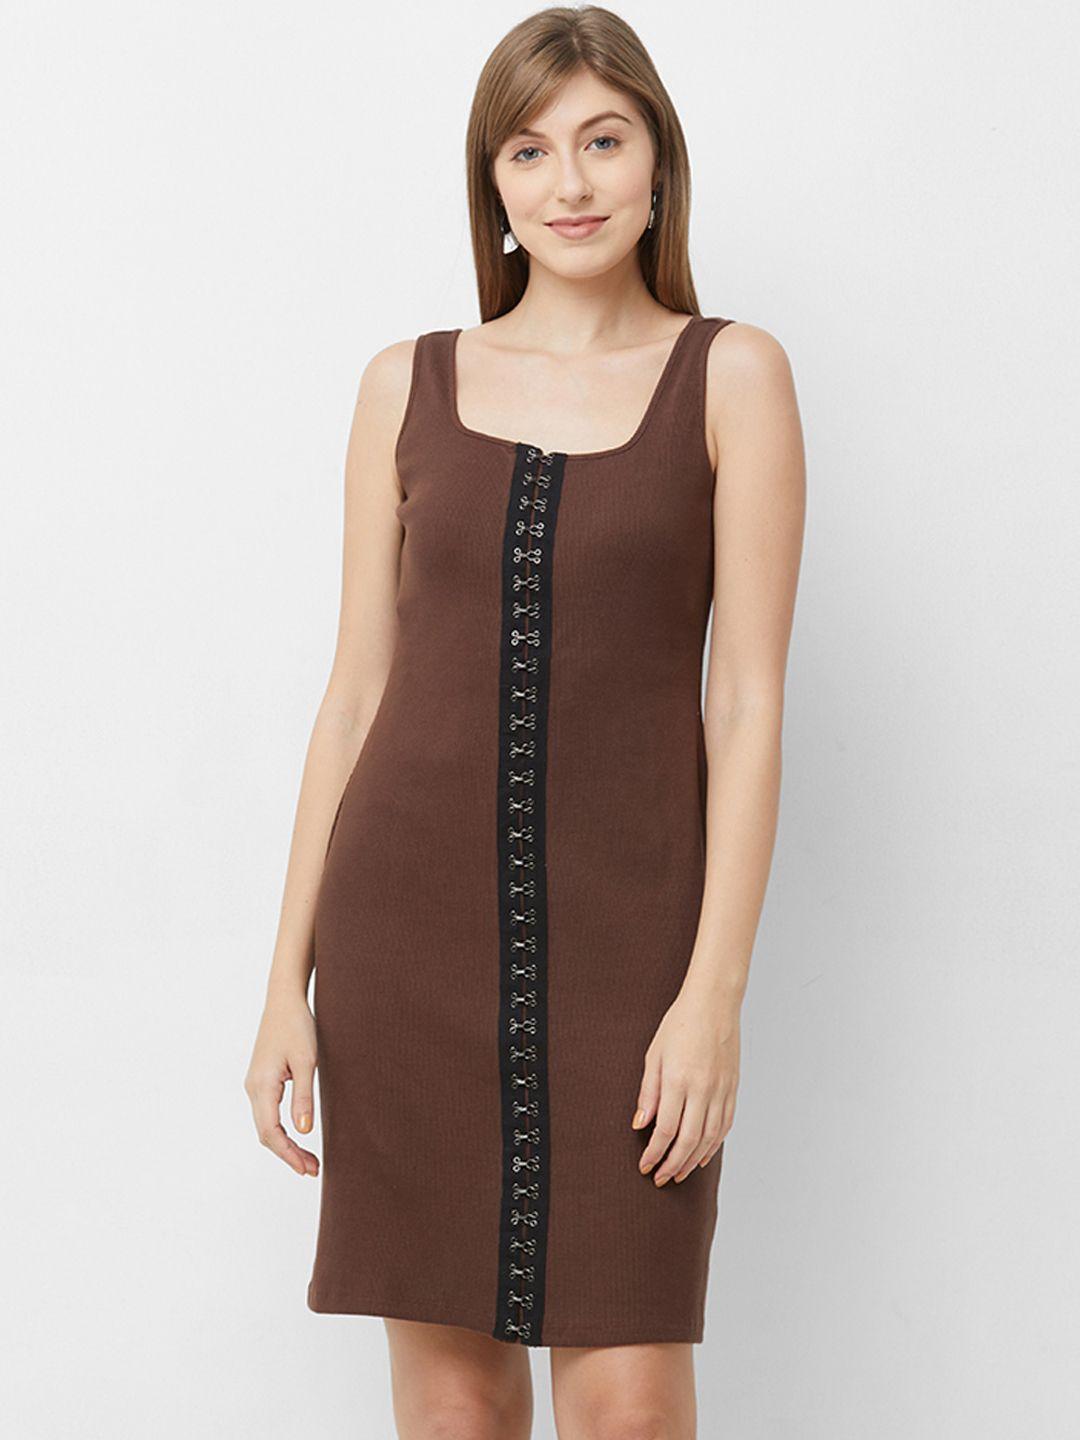 109f women brown solid sheath dress